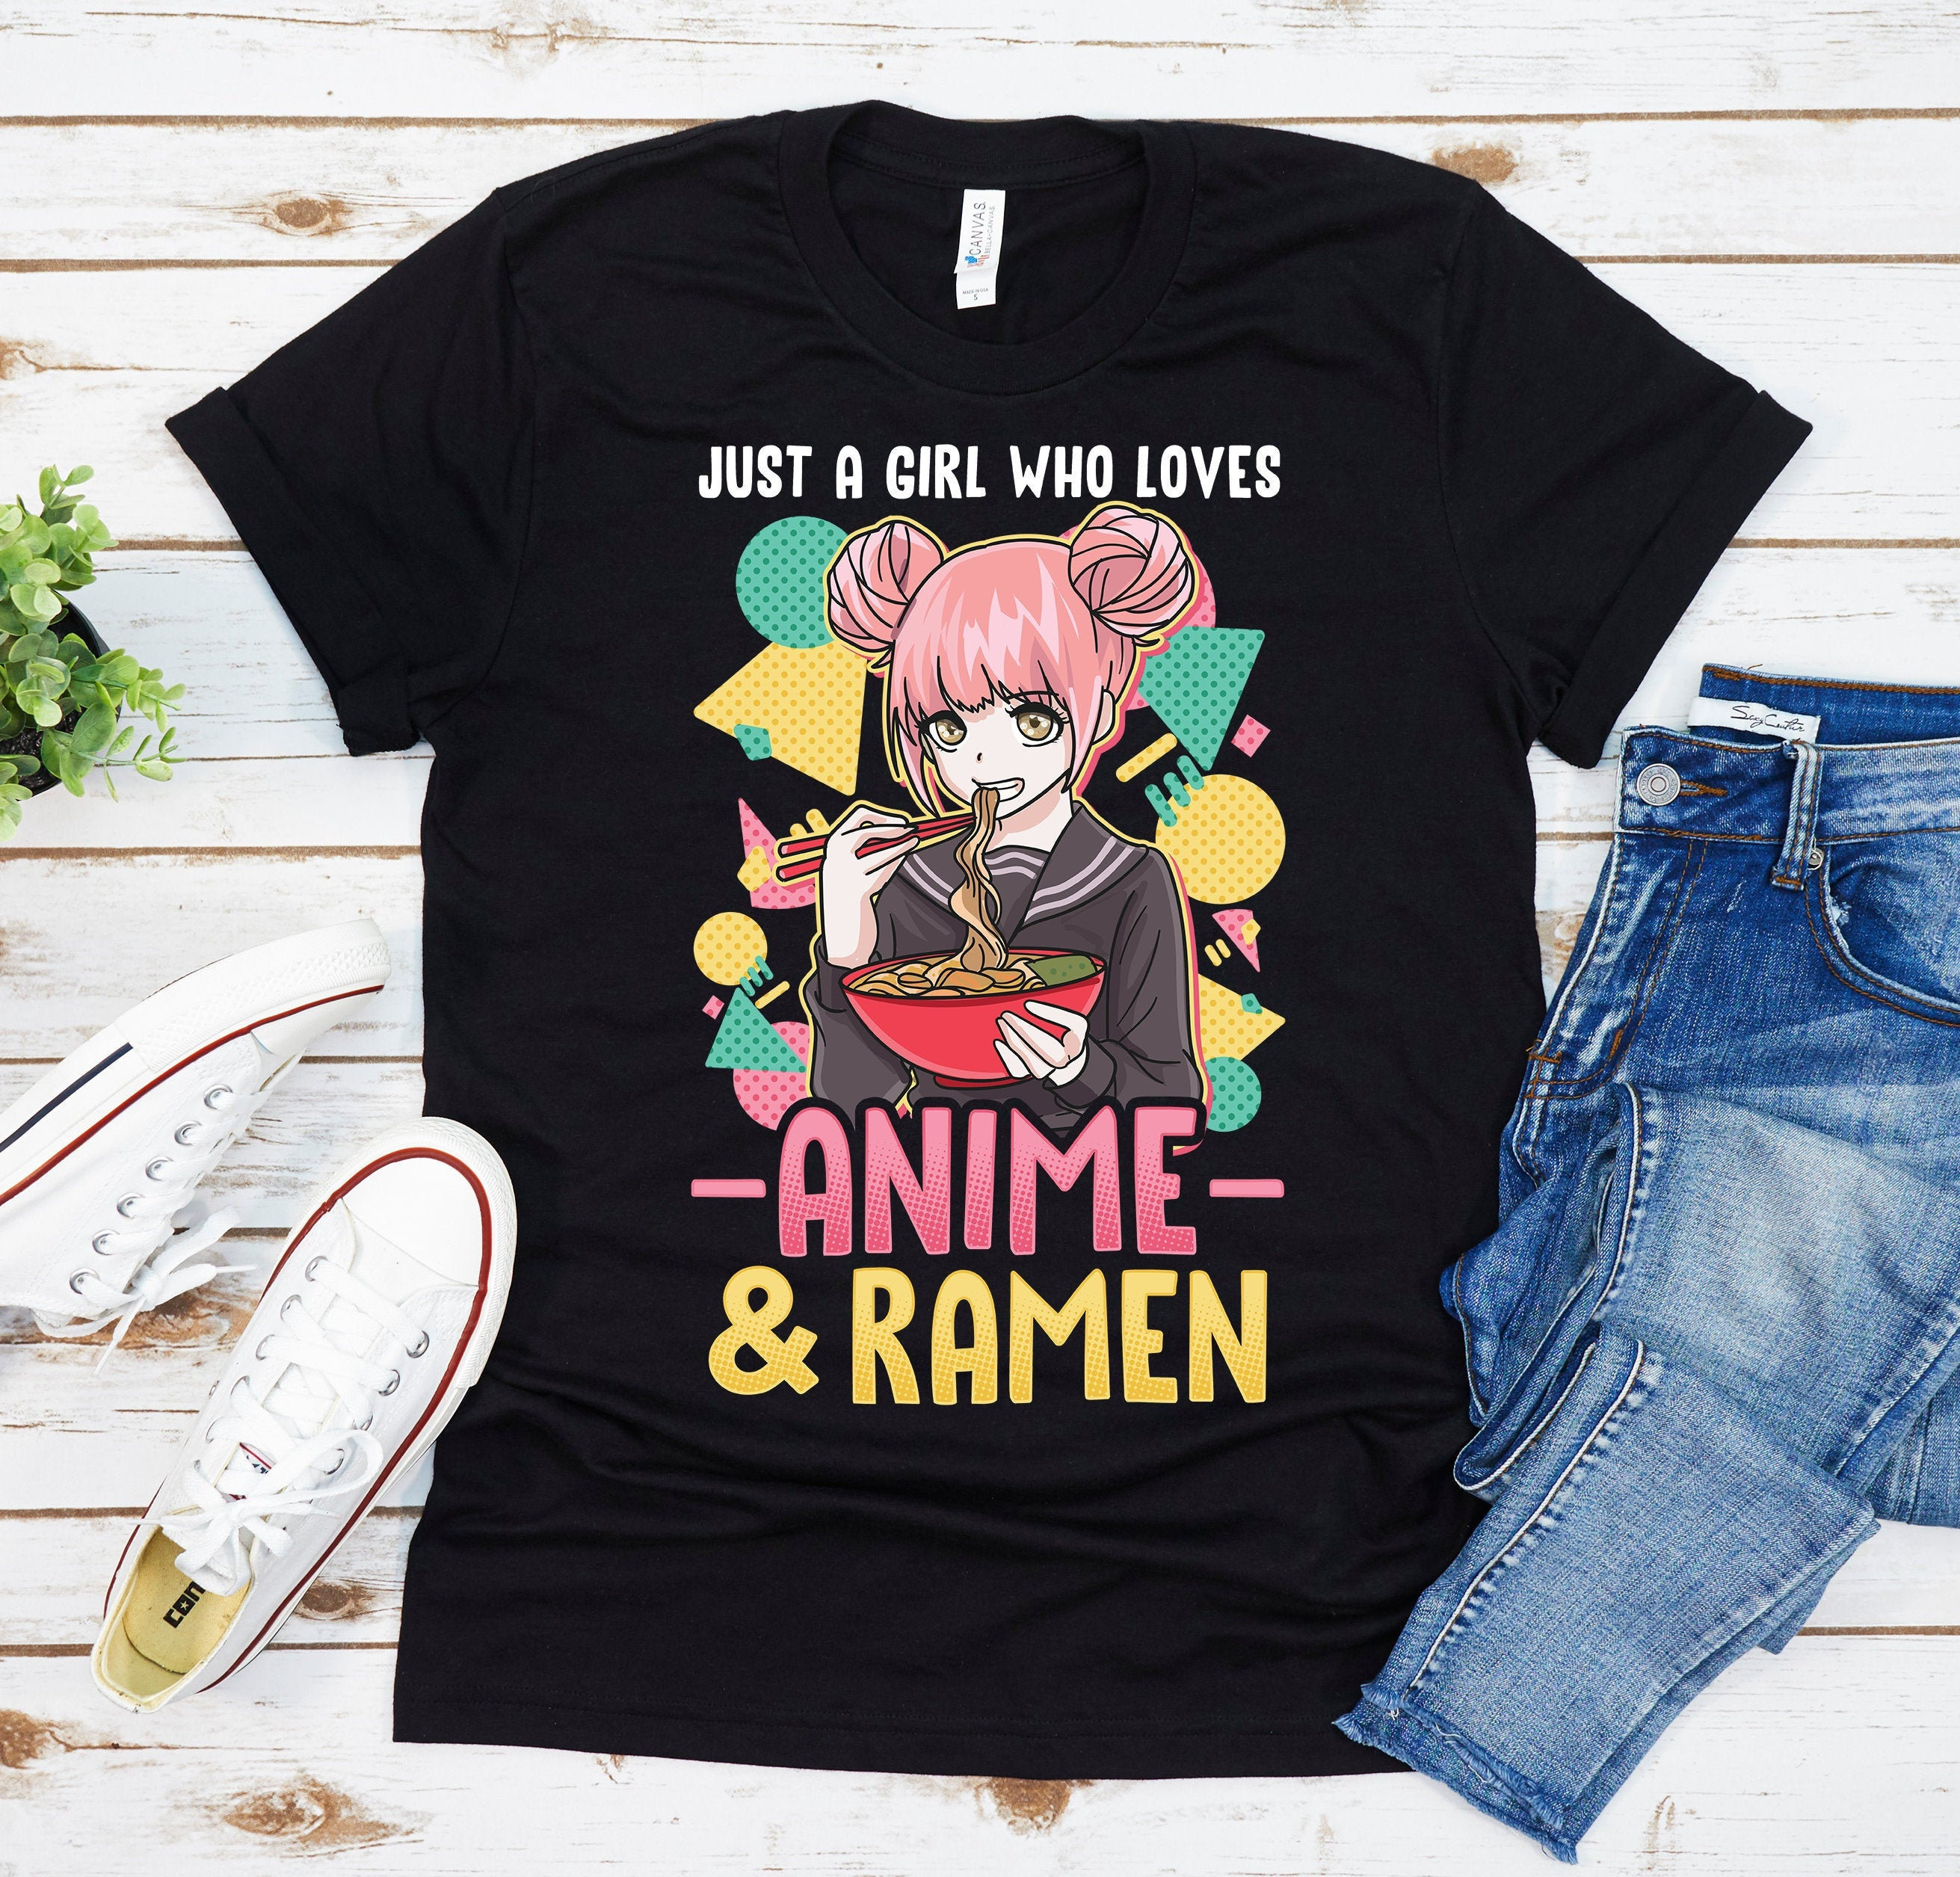 Just A Girl Who Loves Anime & Ramen Shirt Shirts For Girls Gift Lover Manga Otaku